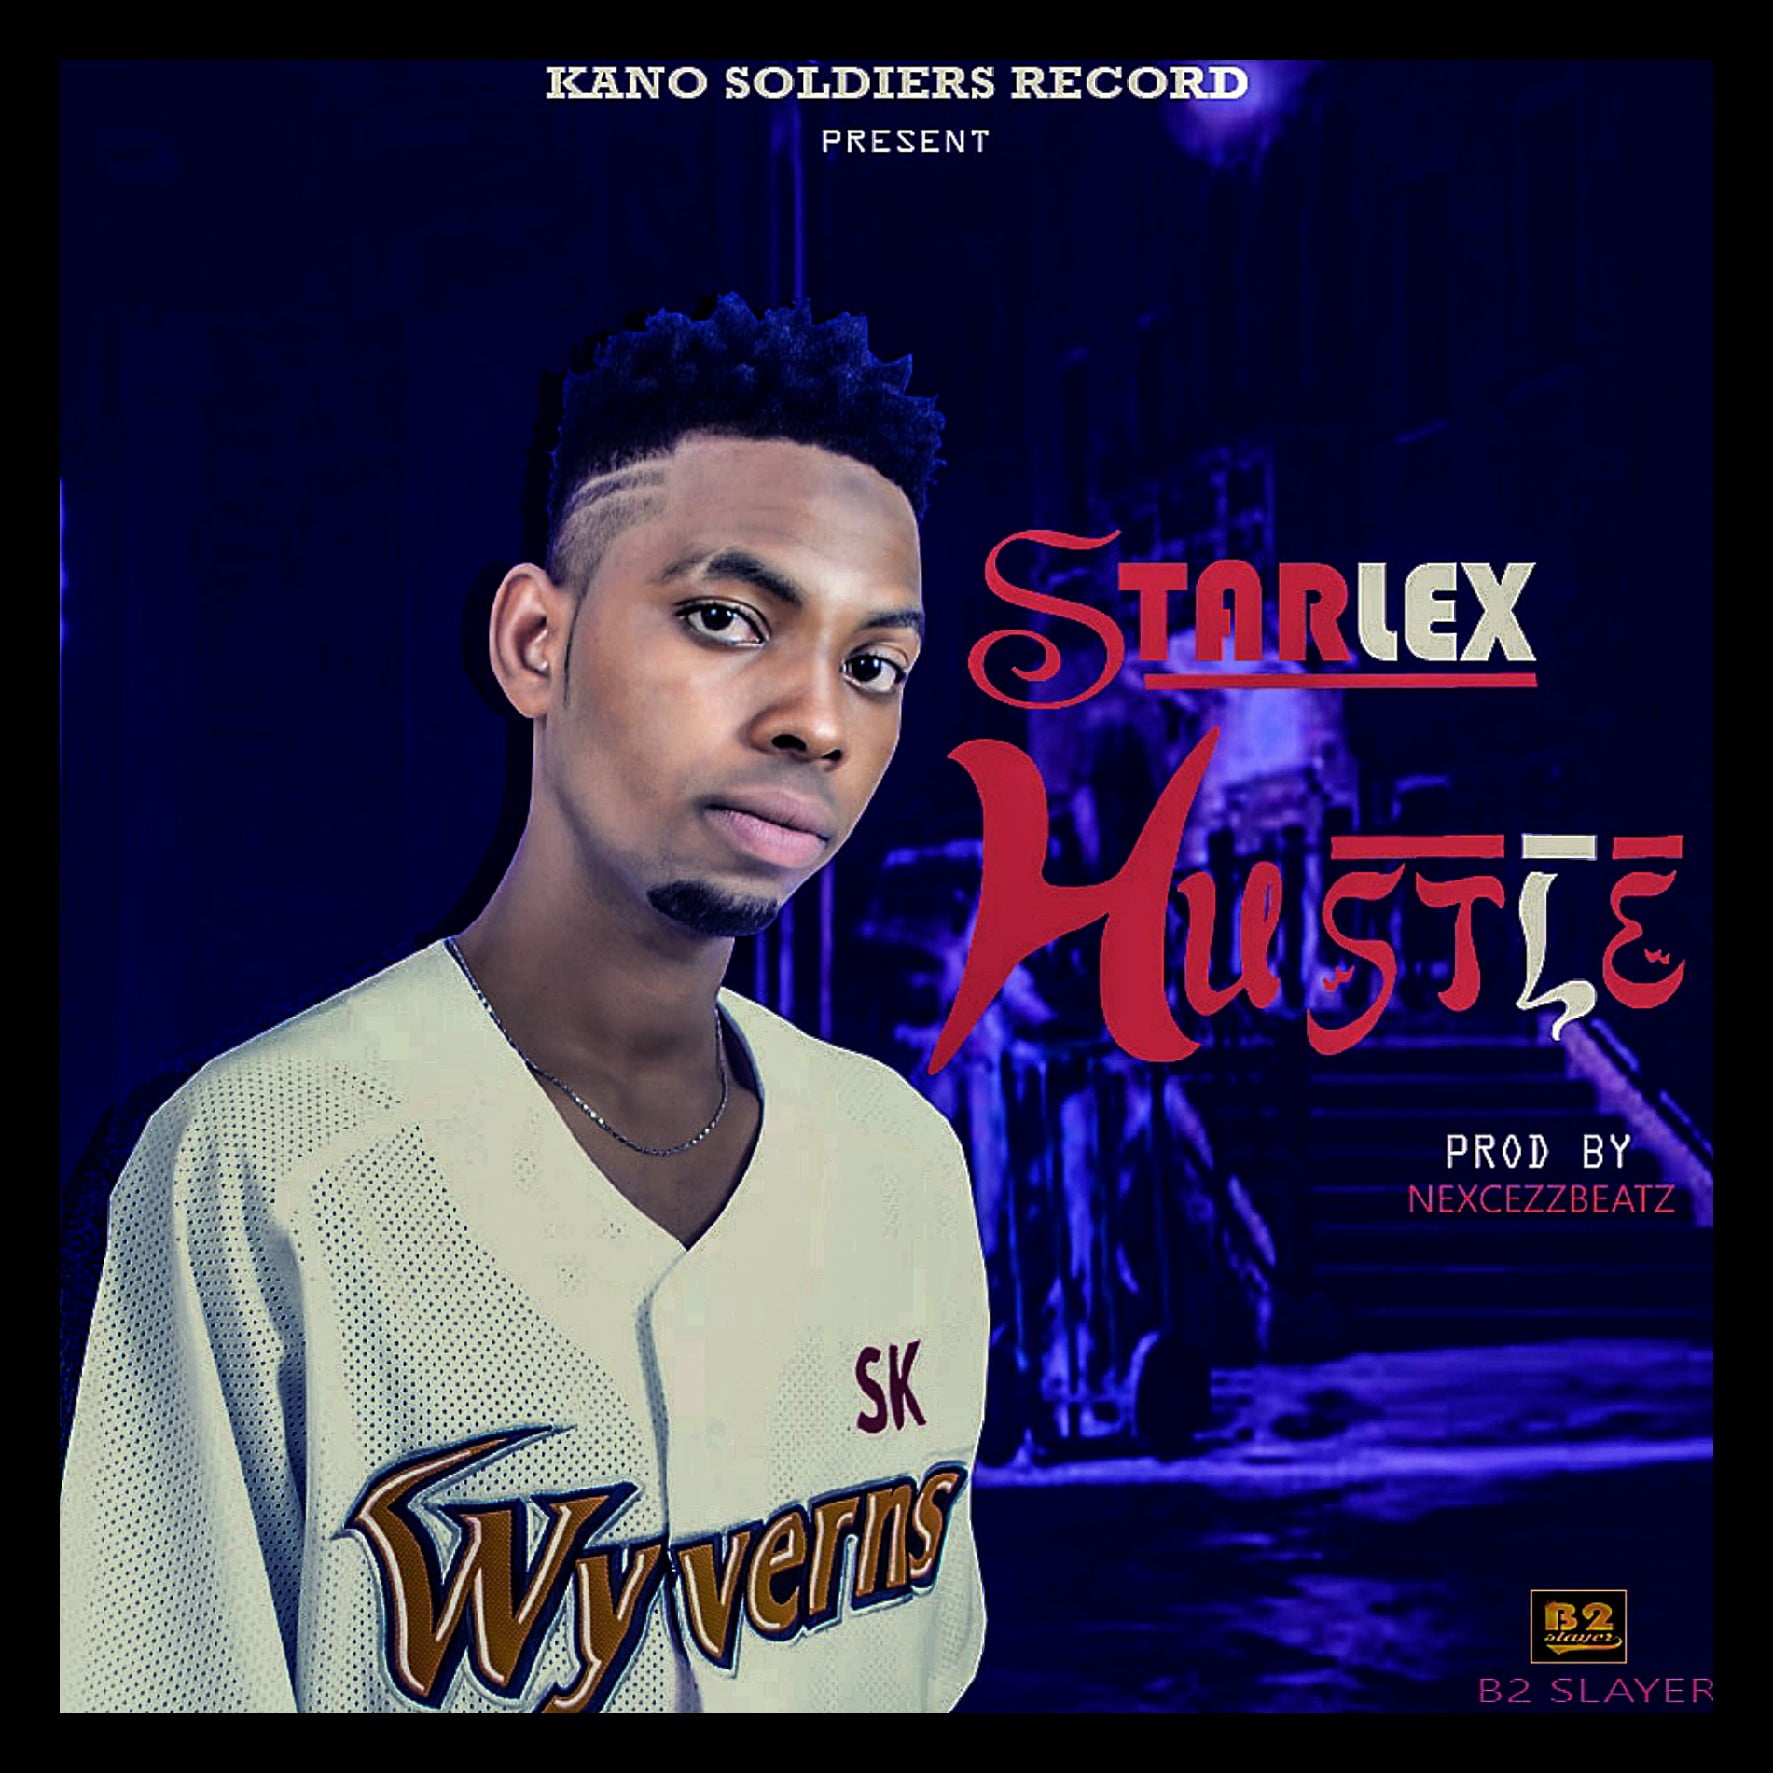 MUSIC: Starlex - Hustle [Download mp3]